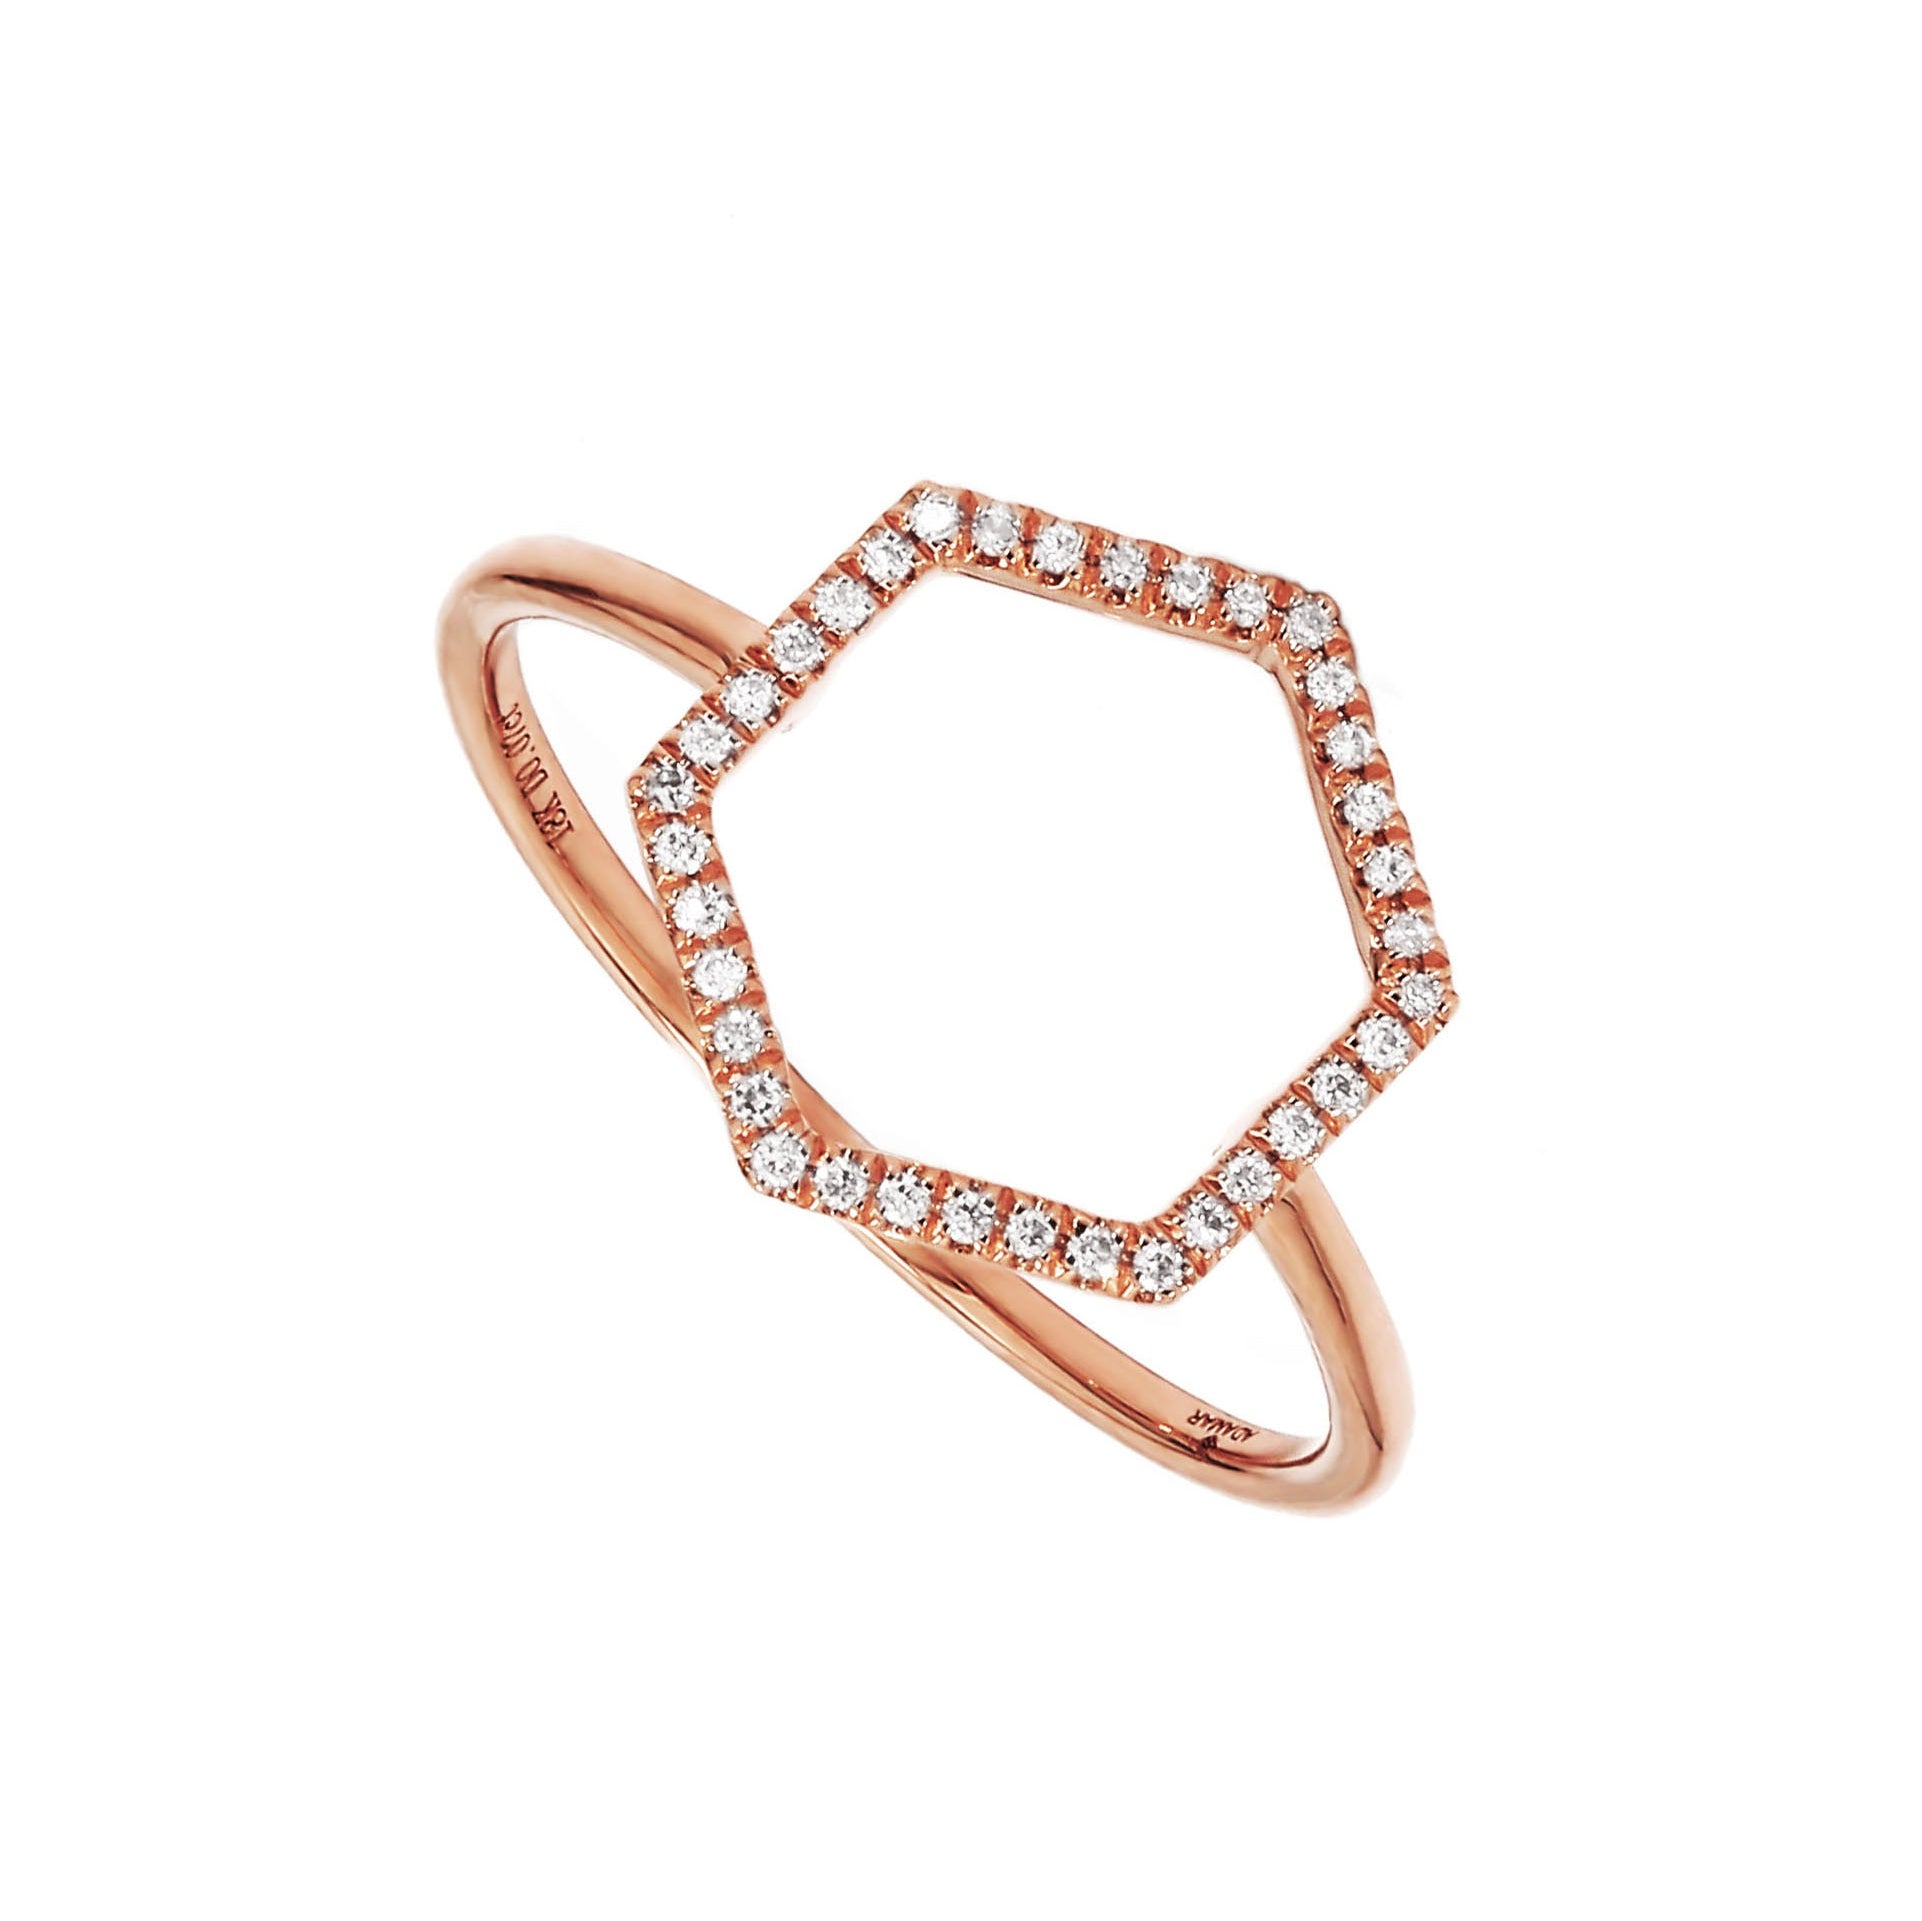 Adamar Jewels LUZ Nube Ring in 18K rose gold set with diamonds